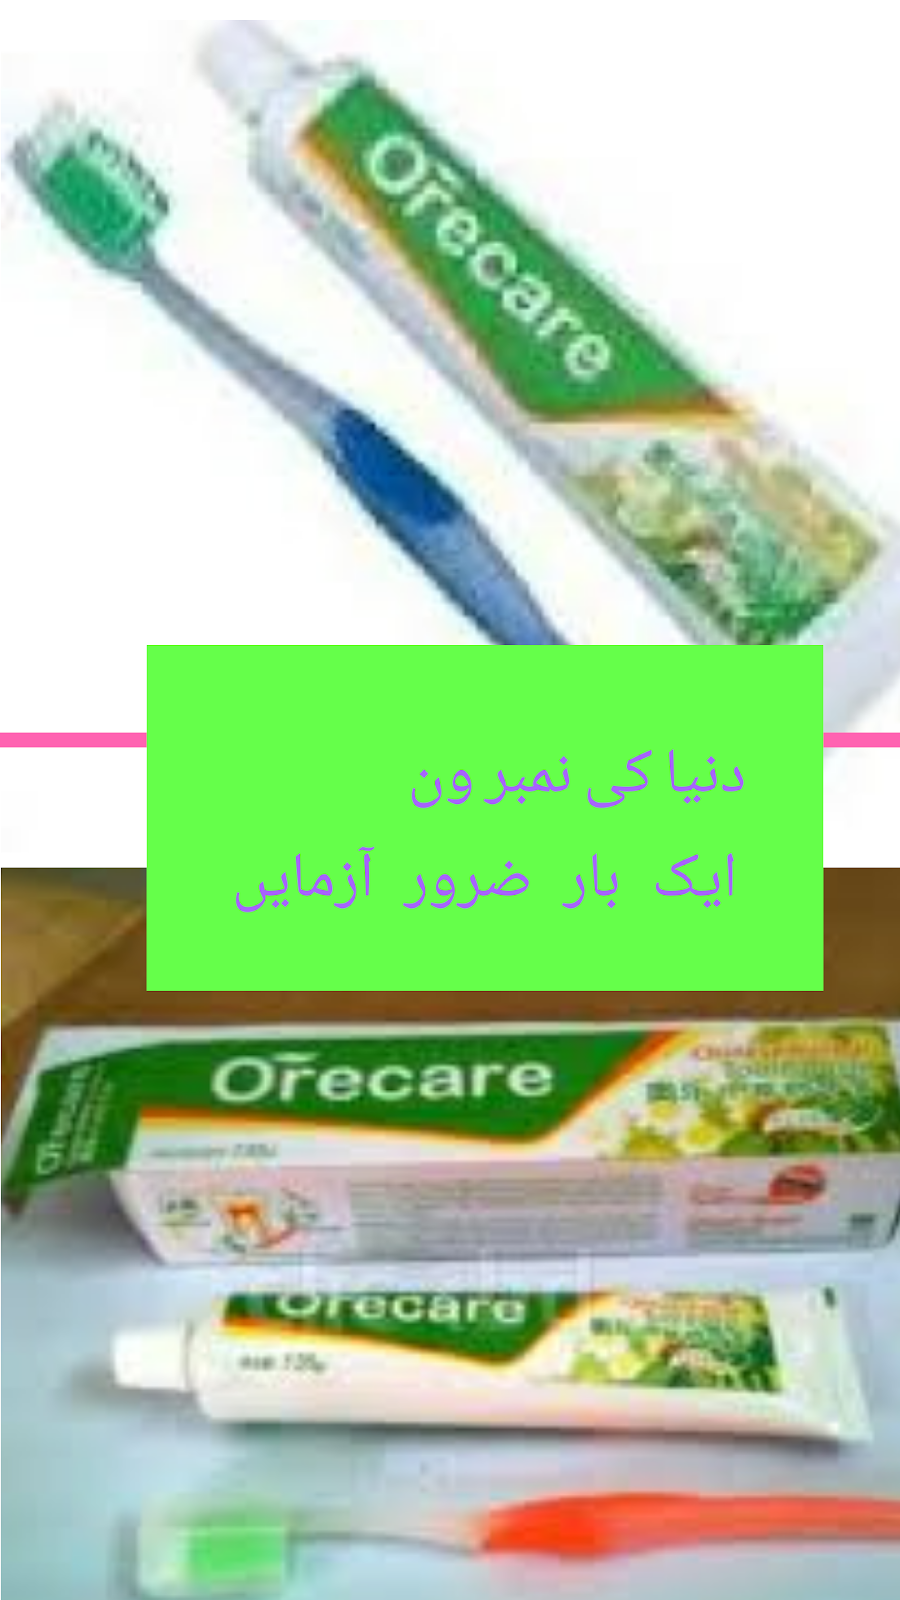 Orecare harbal Toothpaste